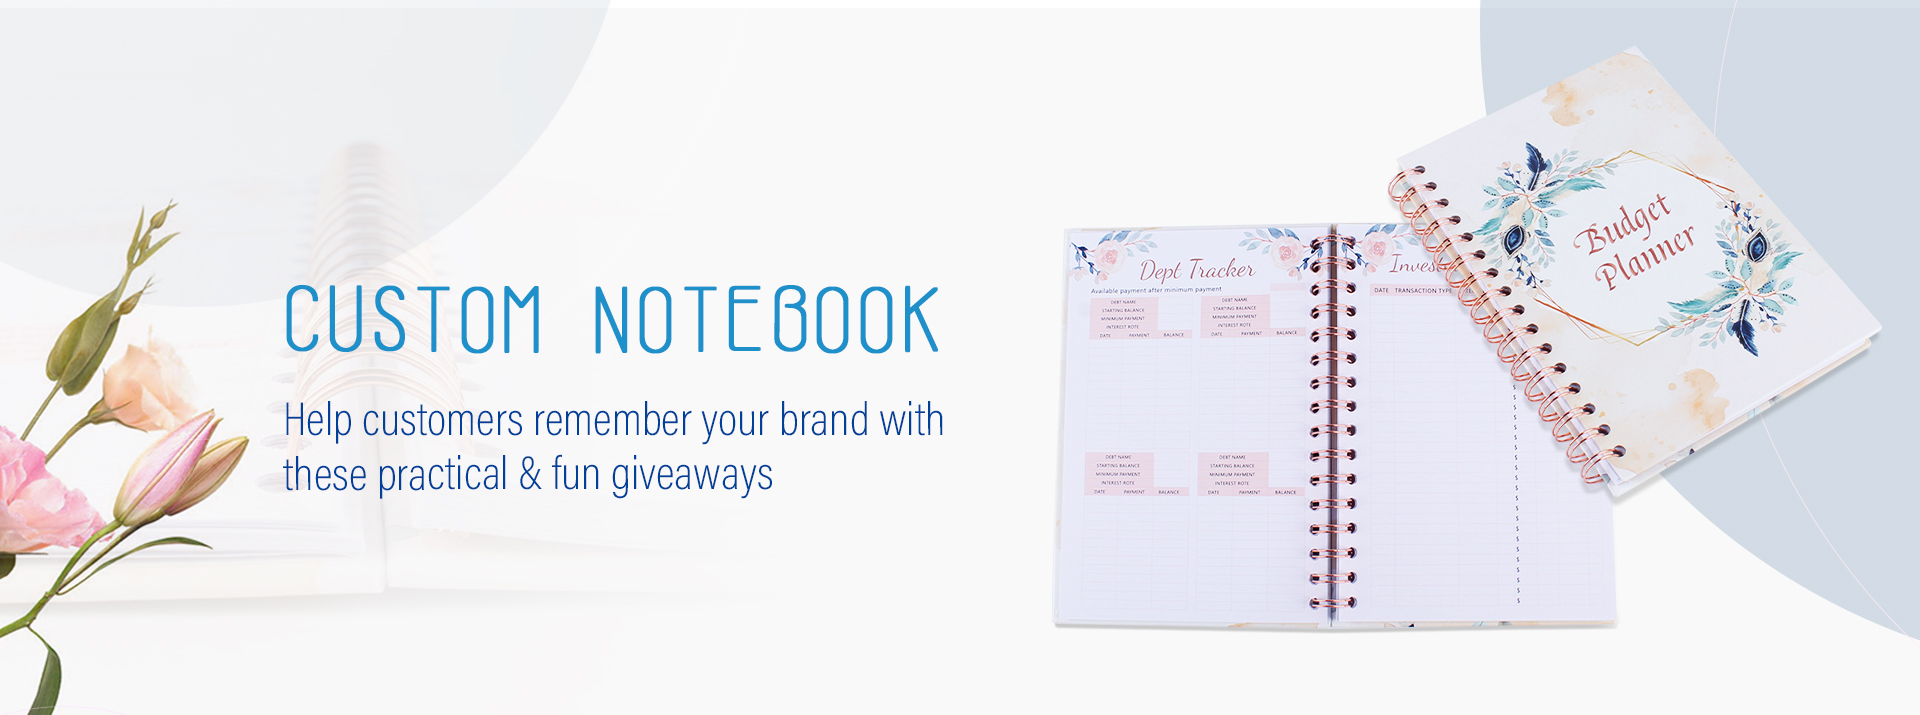 Caiet de jurnal personalizat, colorat, planificator